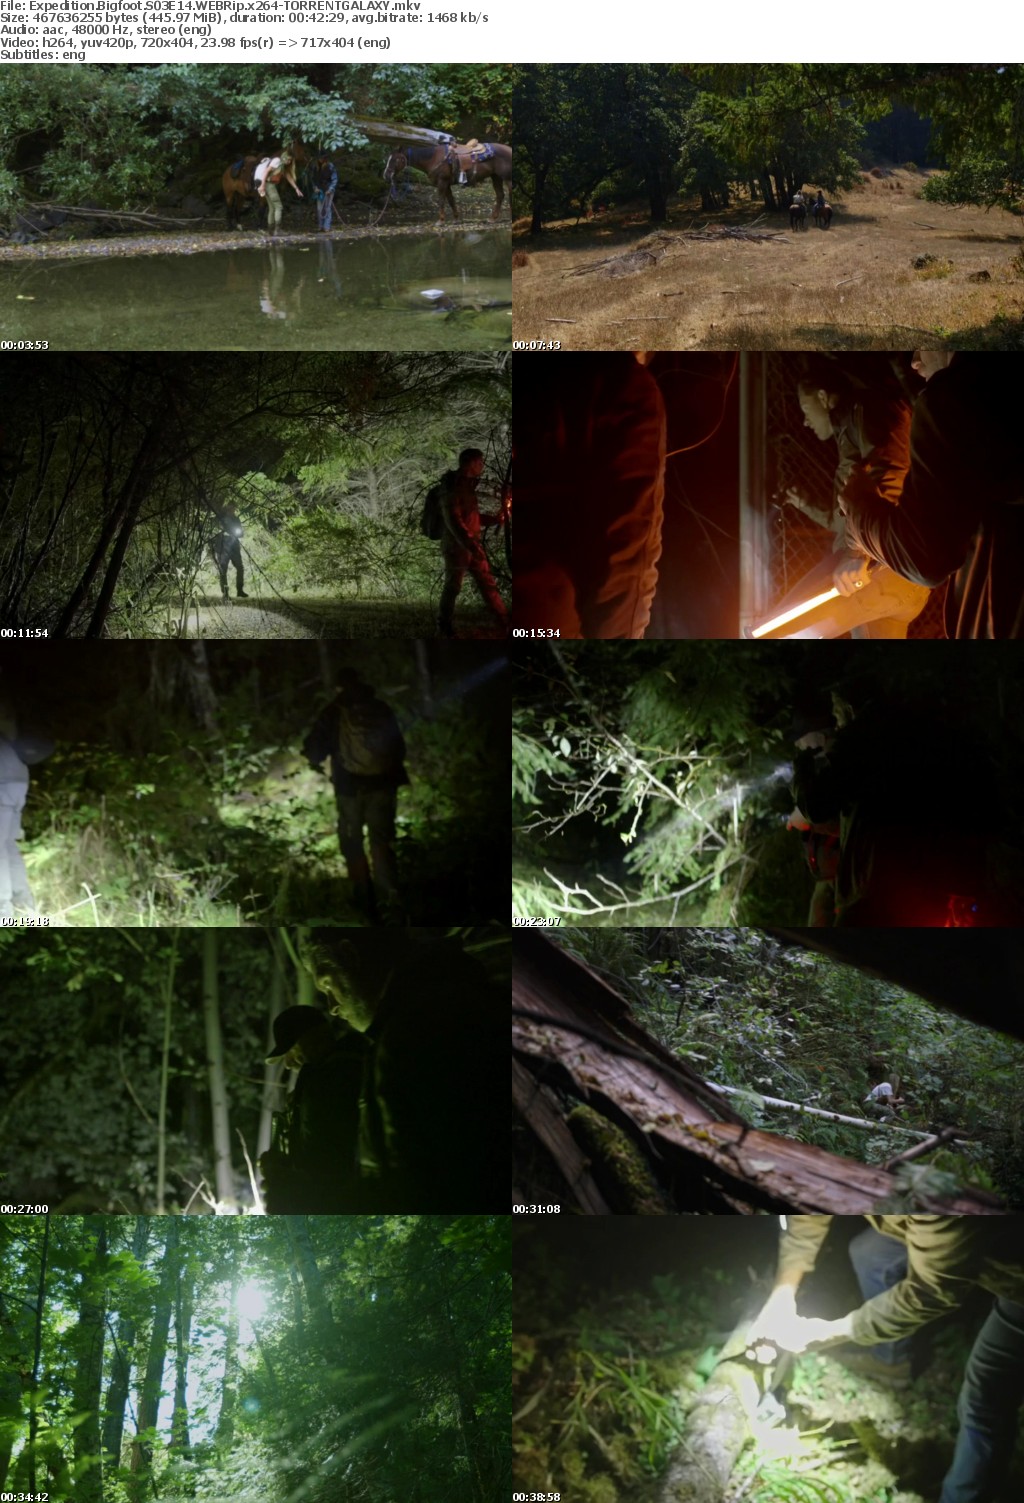 Expedition Bigfoot S03E14 WEBRip x264-GALAXY